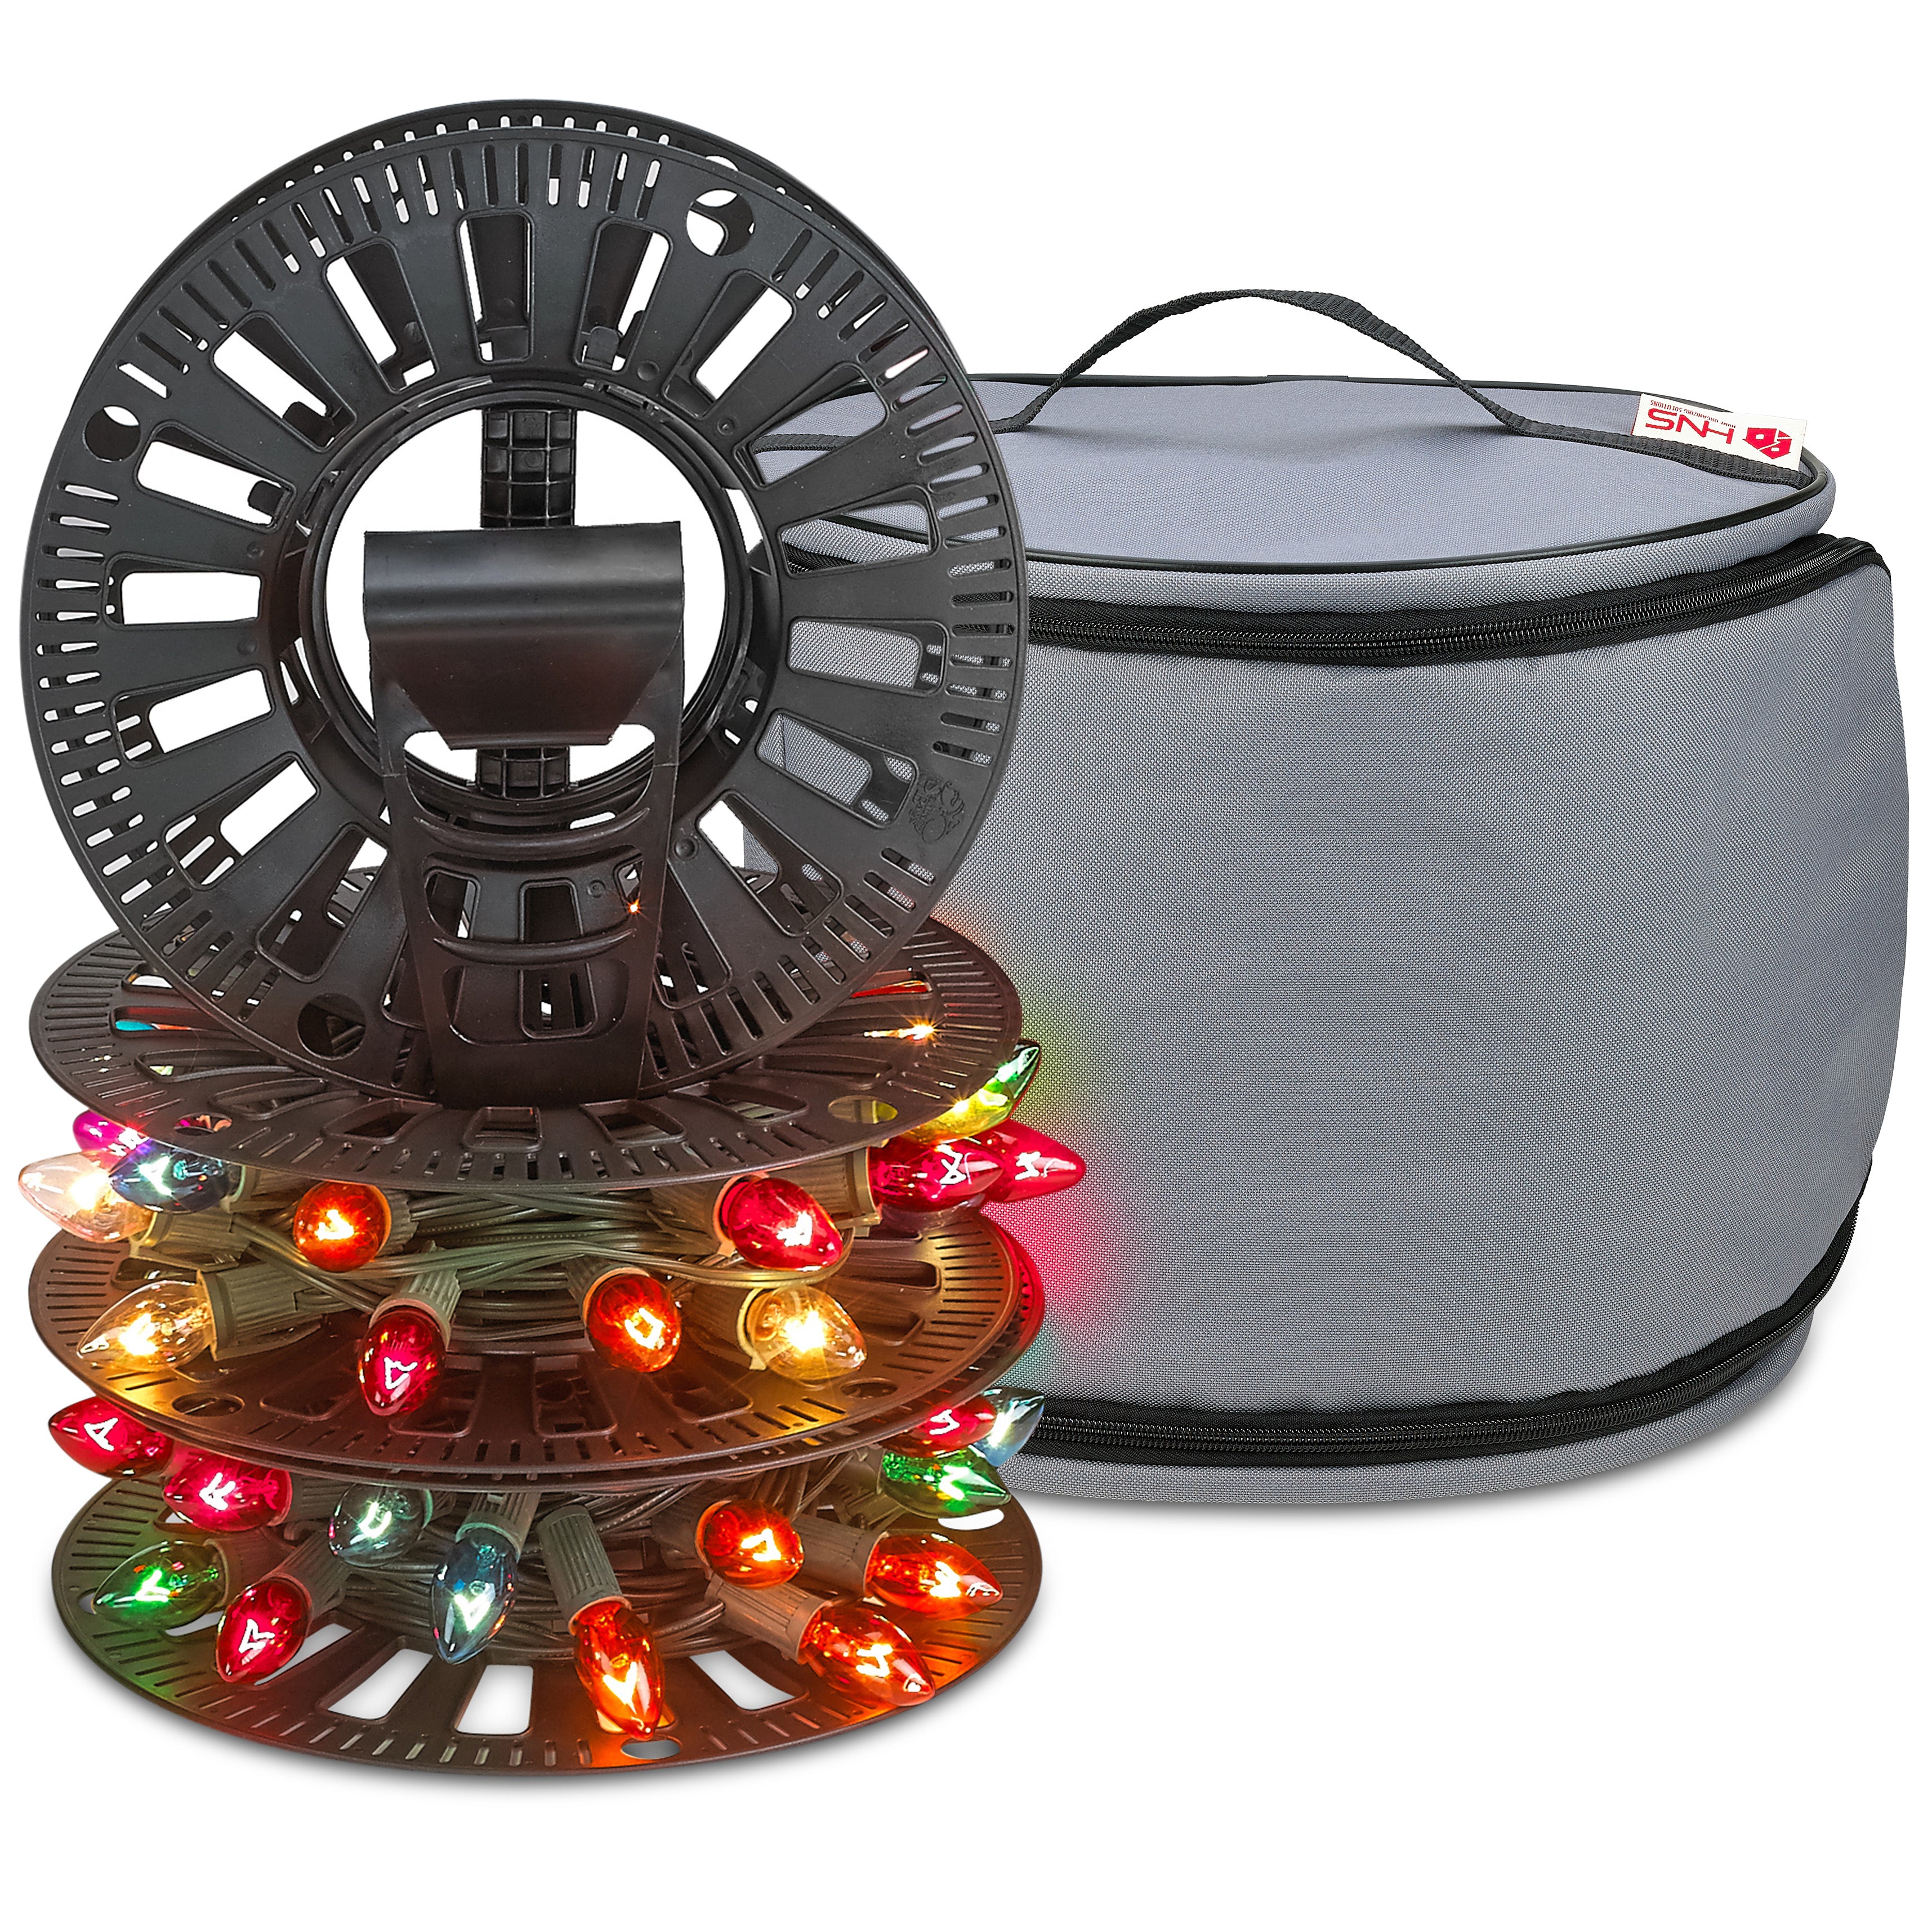 Hold N Storage Christmas Light Storage Reels - Decoration Organizer Bag with Reinforced Handles